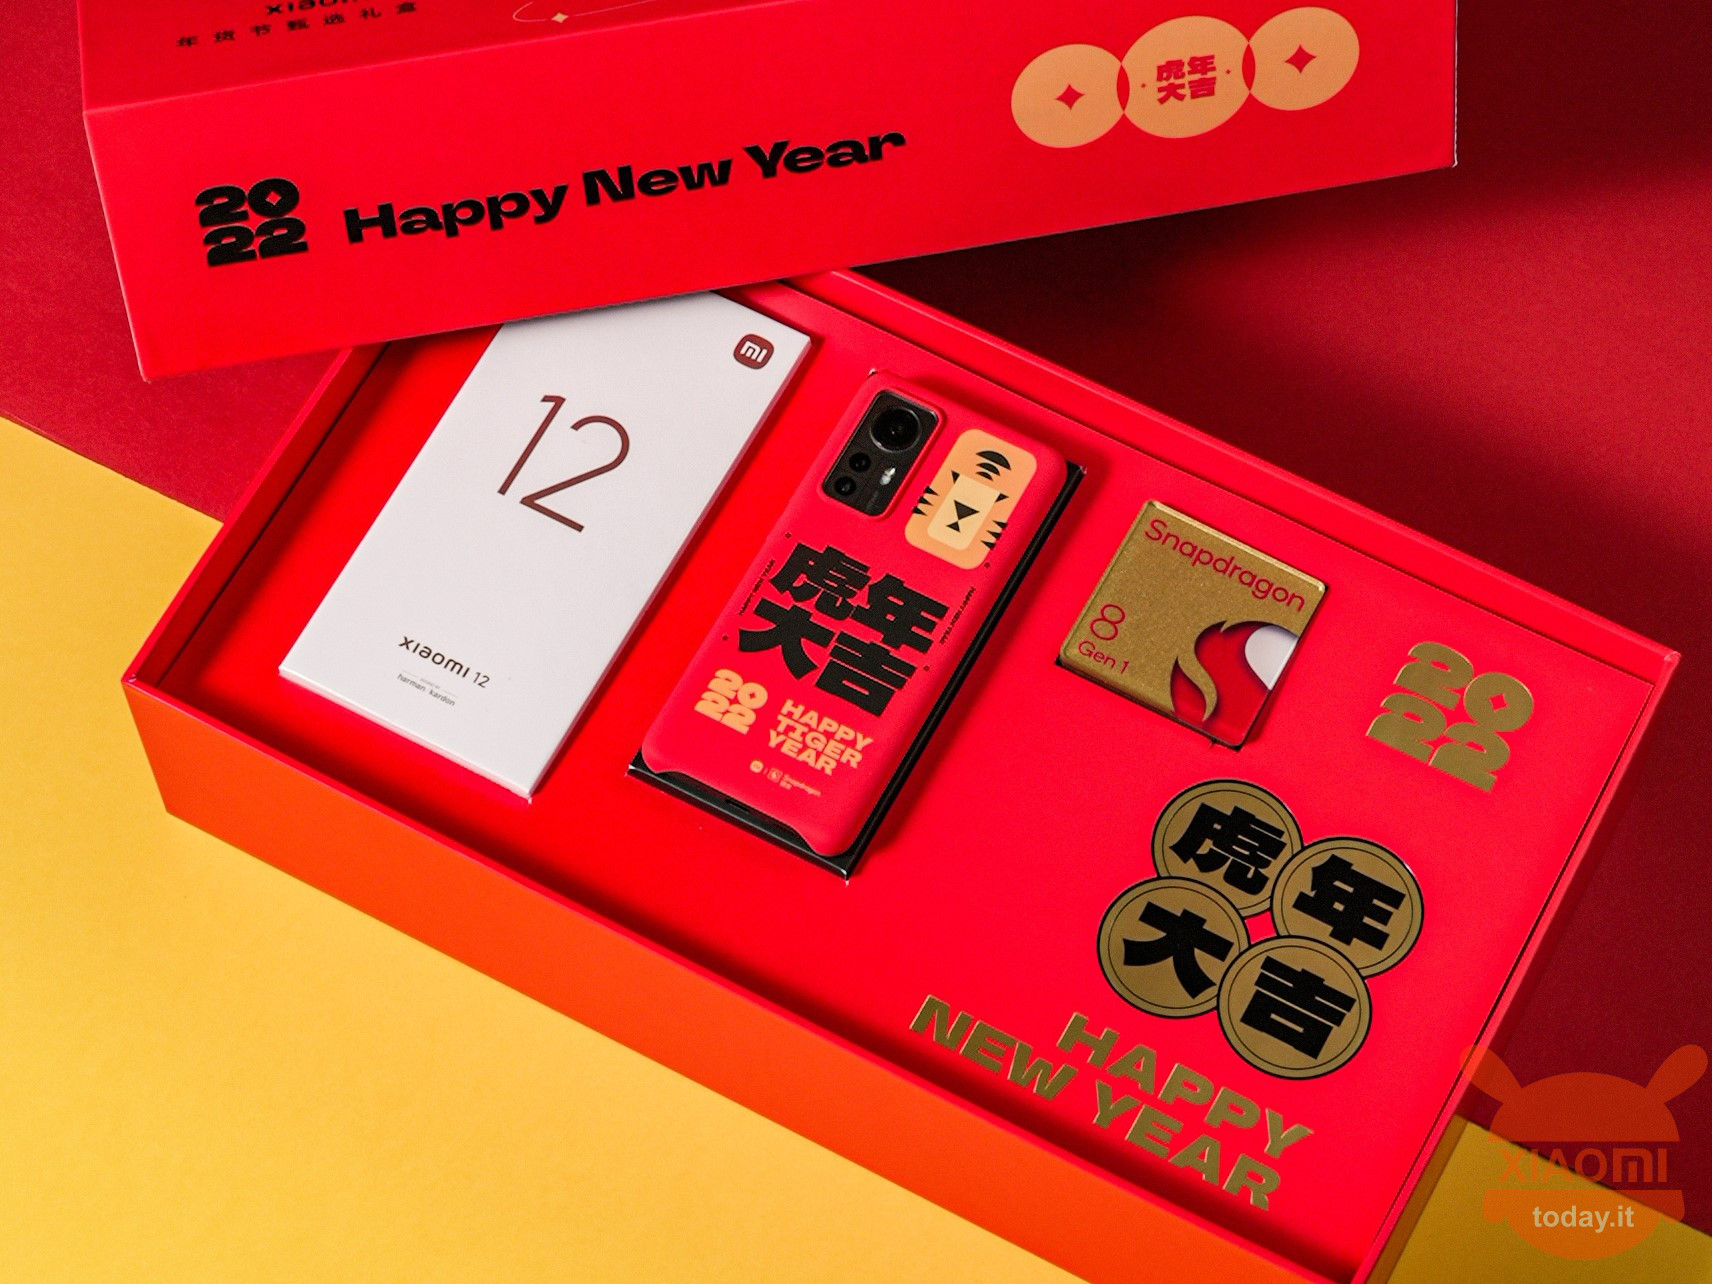 Xiaomi 12 New Year Edition